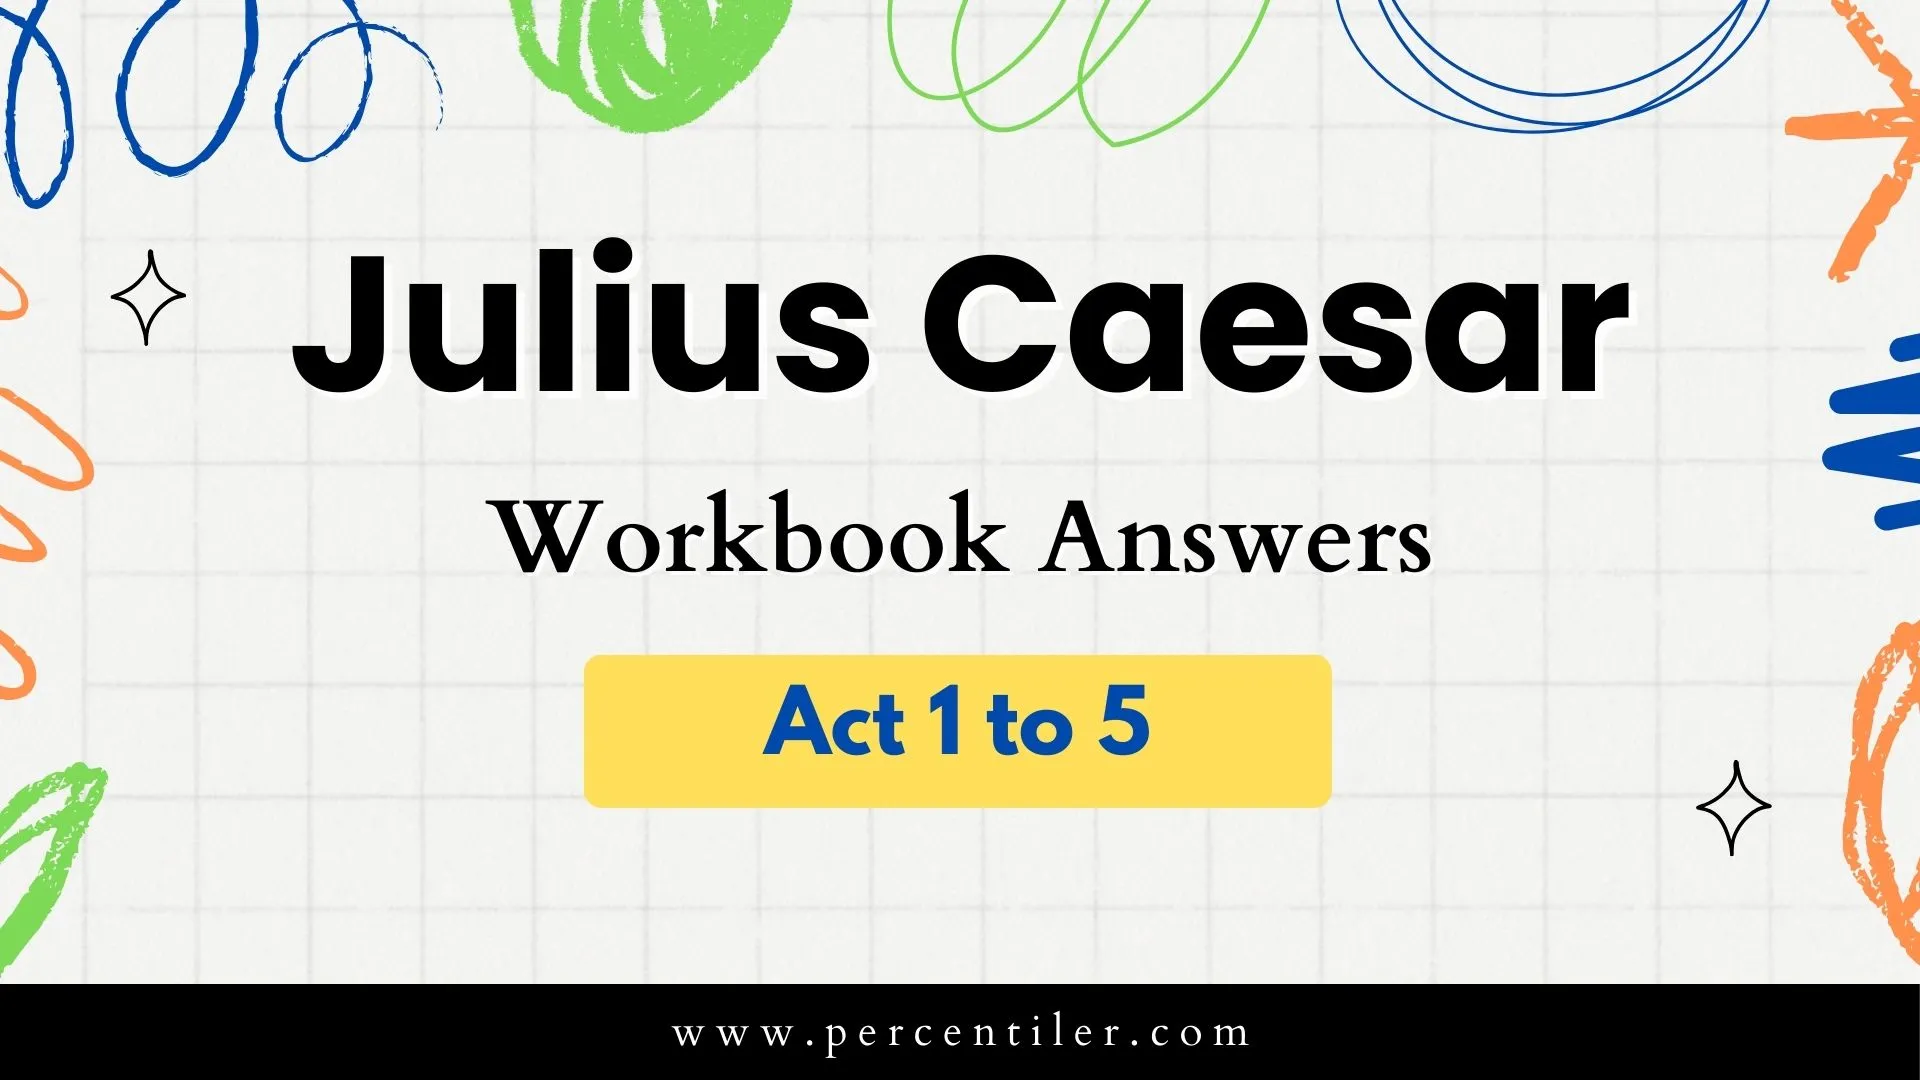 icse julius caesar workbook answers